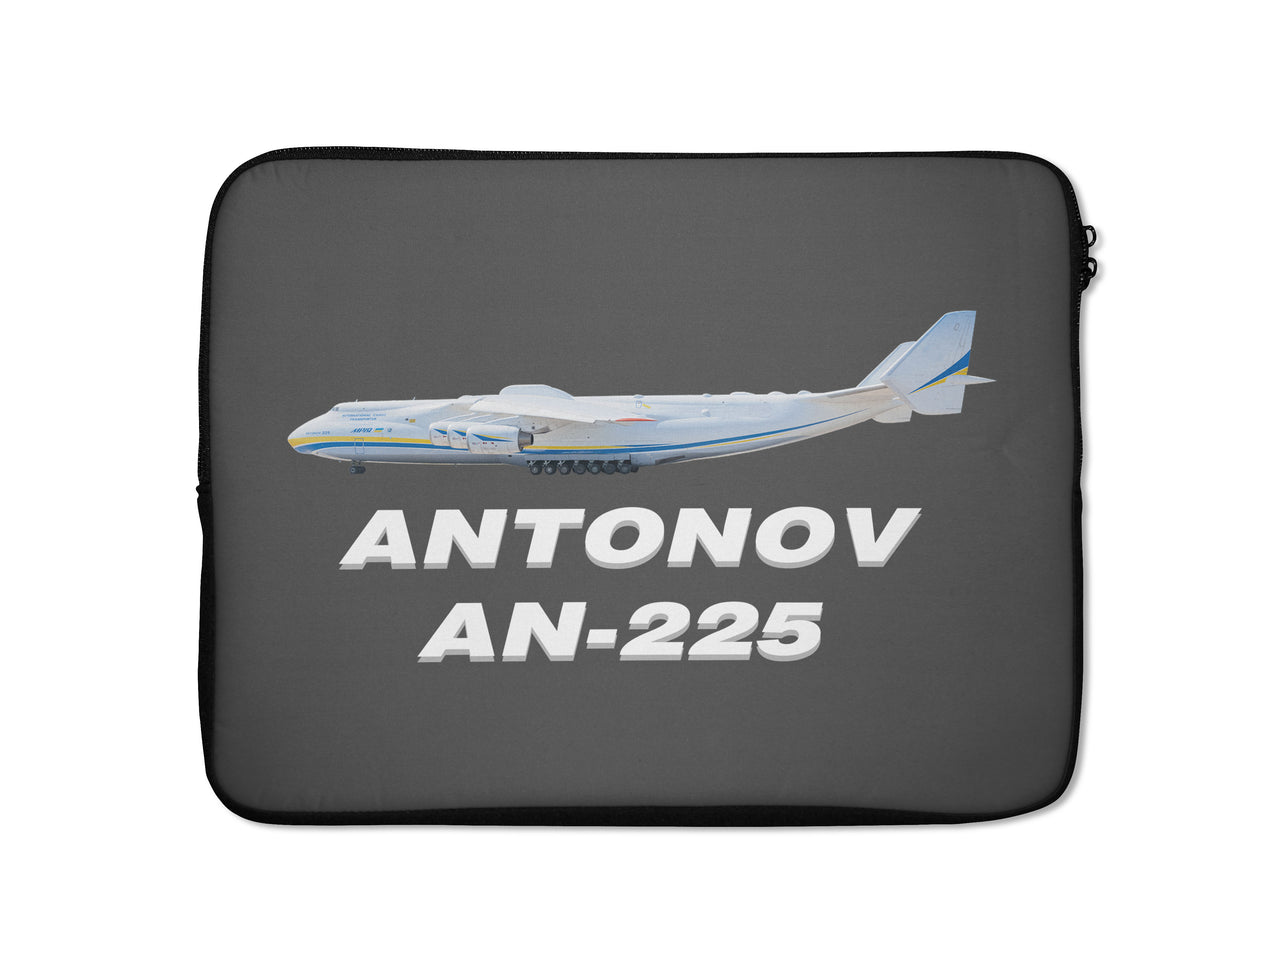 The Antonov AN-225 Designed Laptop & Tablet Cases